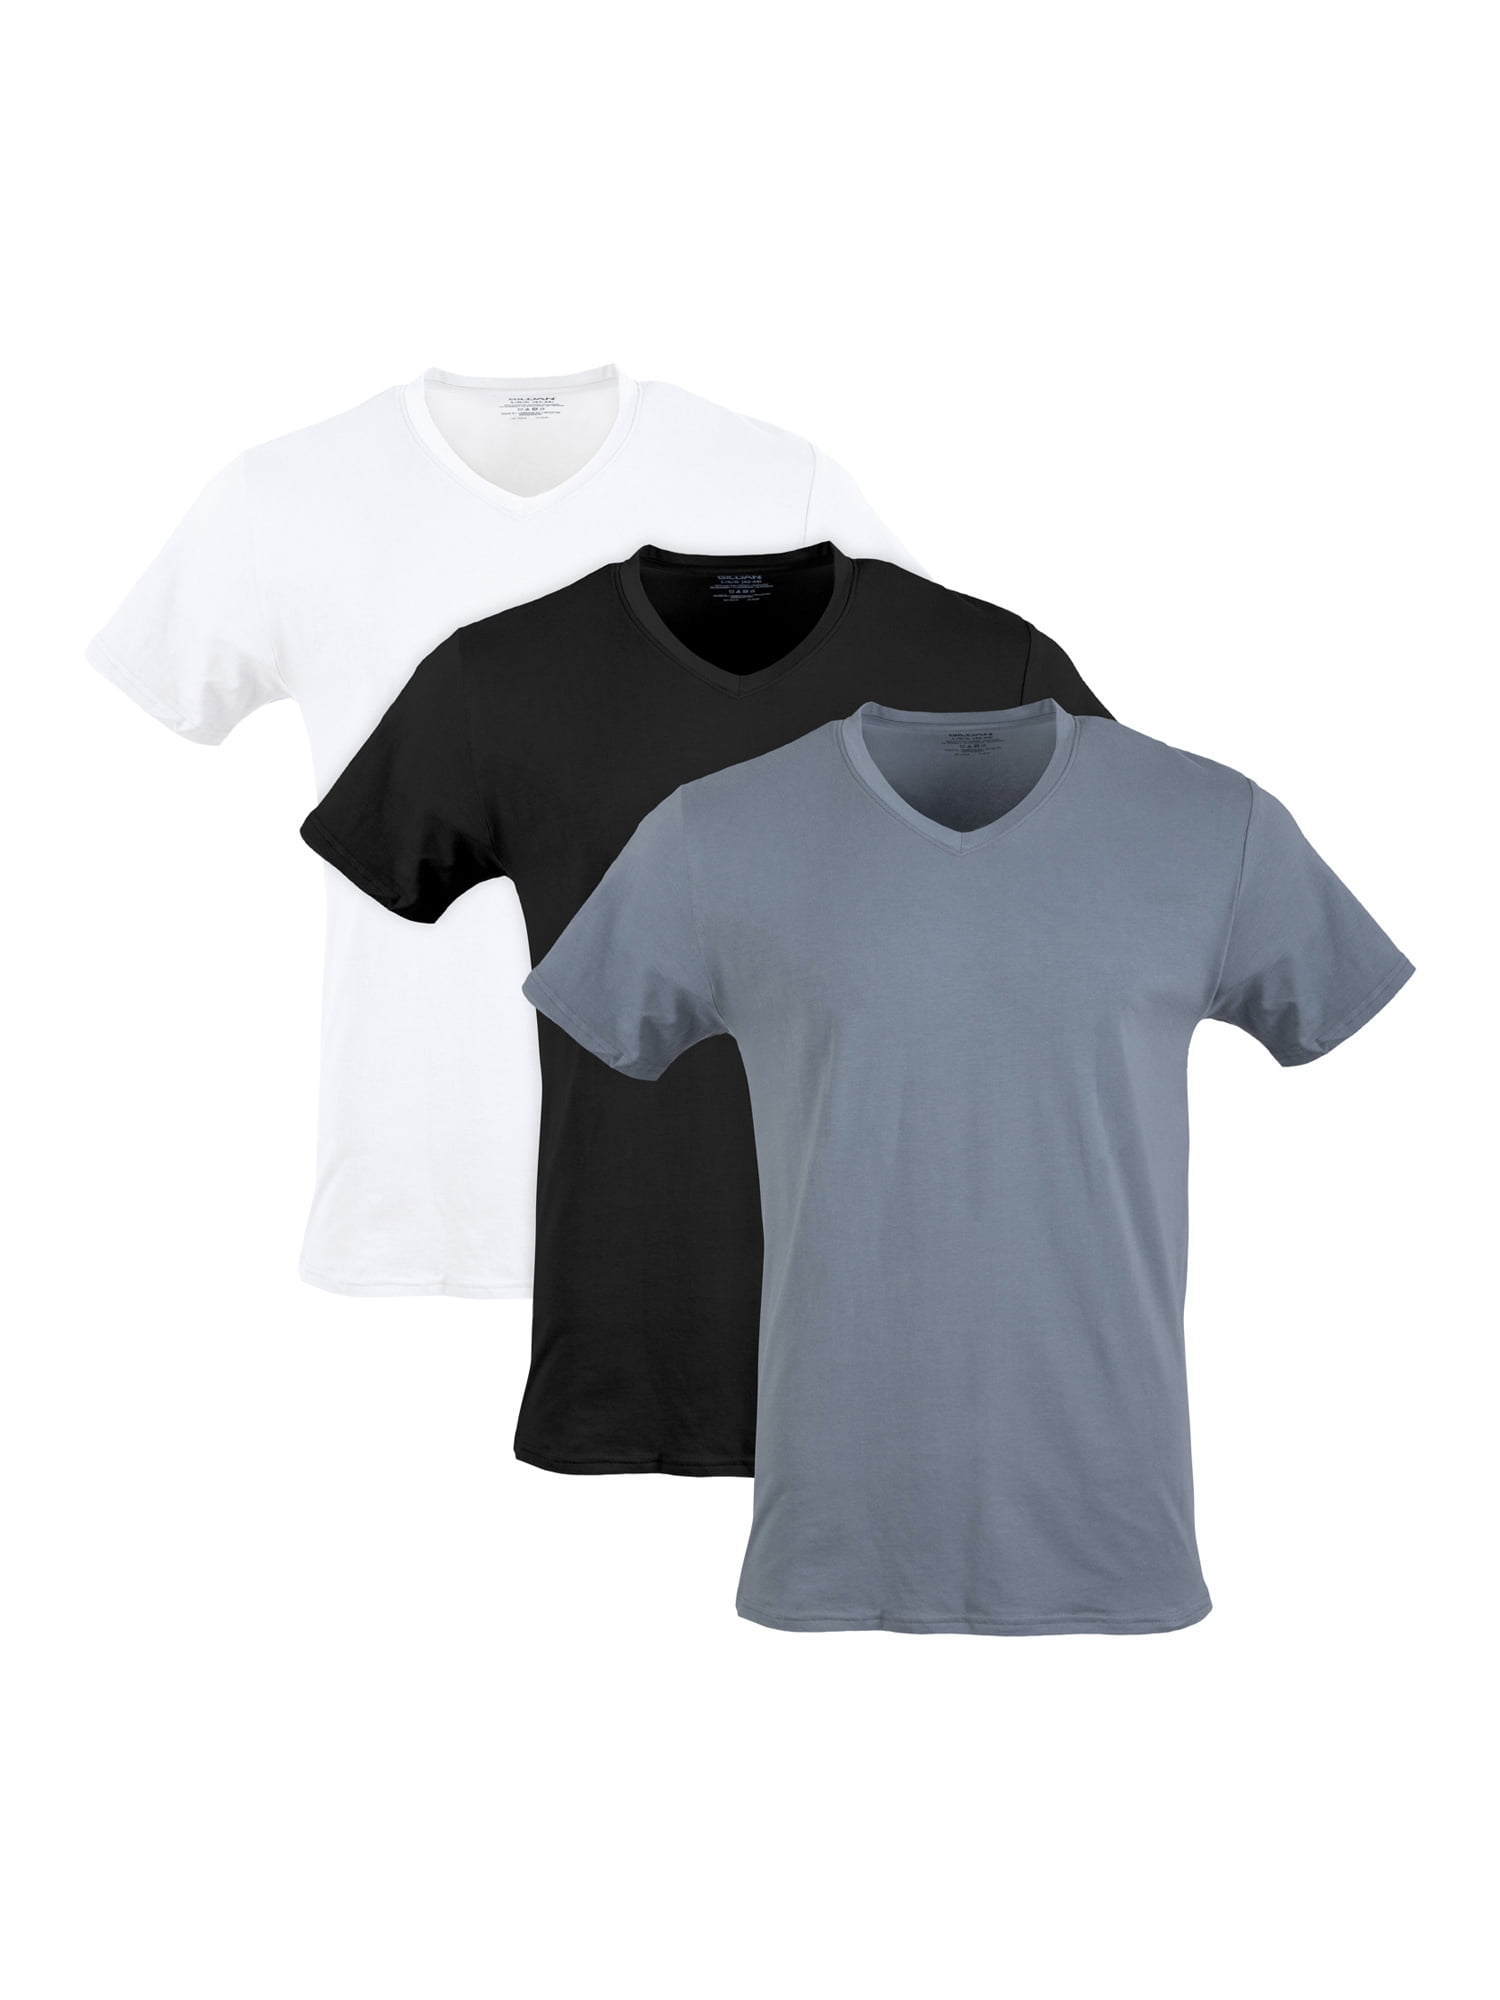 Gildan Men's Short Sleeve Cotton Stretch V-Neck T-Shirts, up to 3-Pack